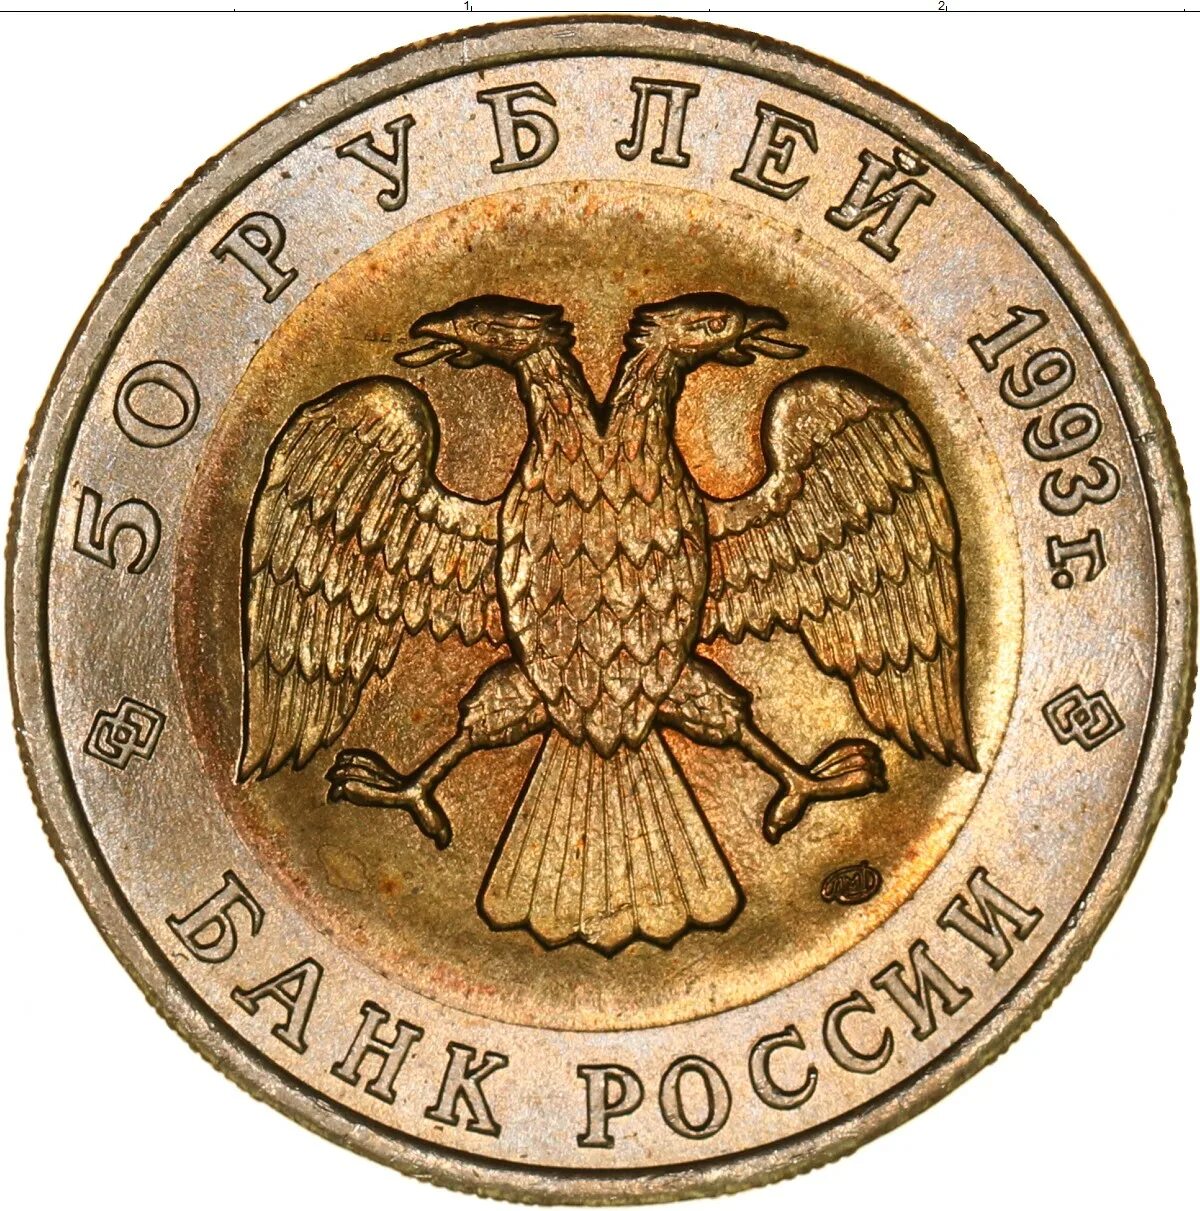 50 Рублей 1993 Биметалл. Монета 50 рублей 1993 Биметалл. 50 Рублей 1993 Биметалл на столе. 50 Рублей 1993 Биметалл фото.